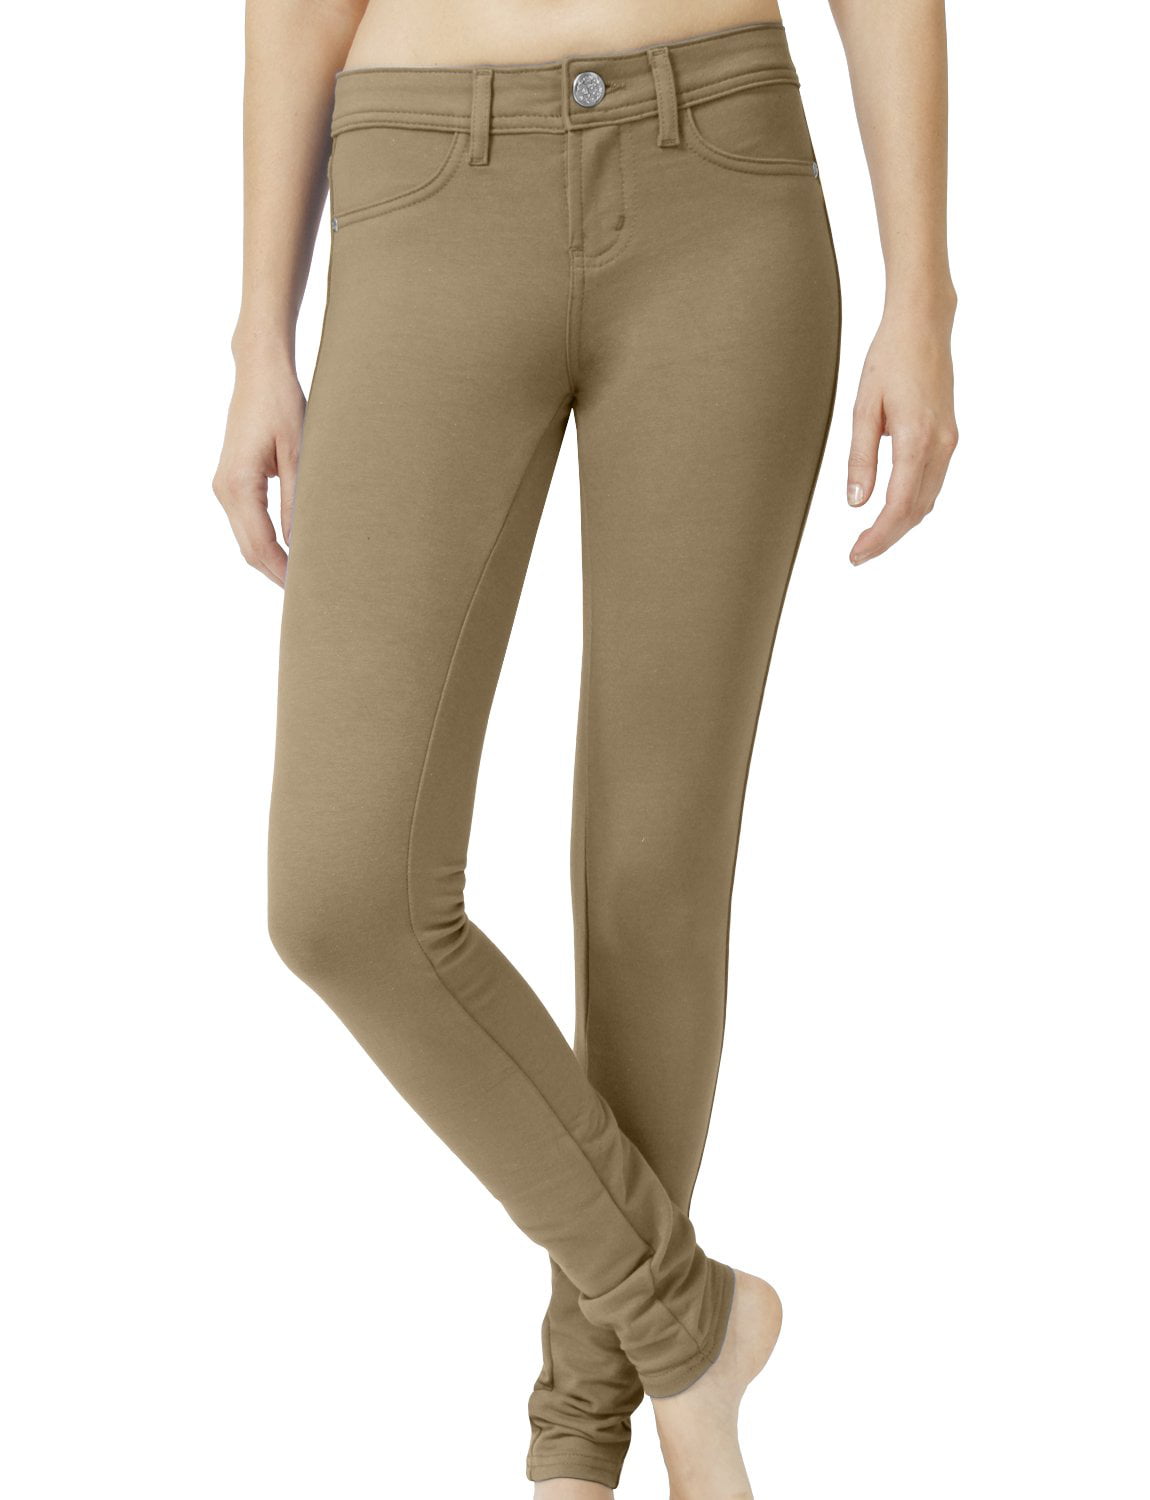 J. METHOD Women\'s Skinny Pants Soft Everyday Solid Color Basic Slim Tight  Fit Stretch Legging Jeggings Jeans NEWP77 Dark Purple 3X